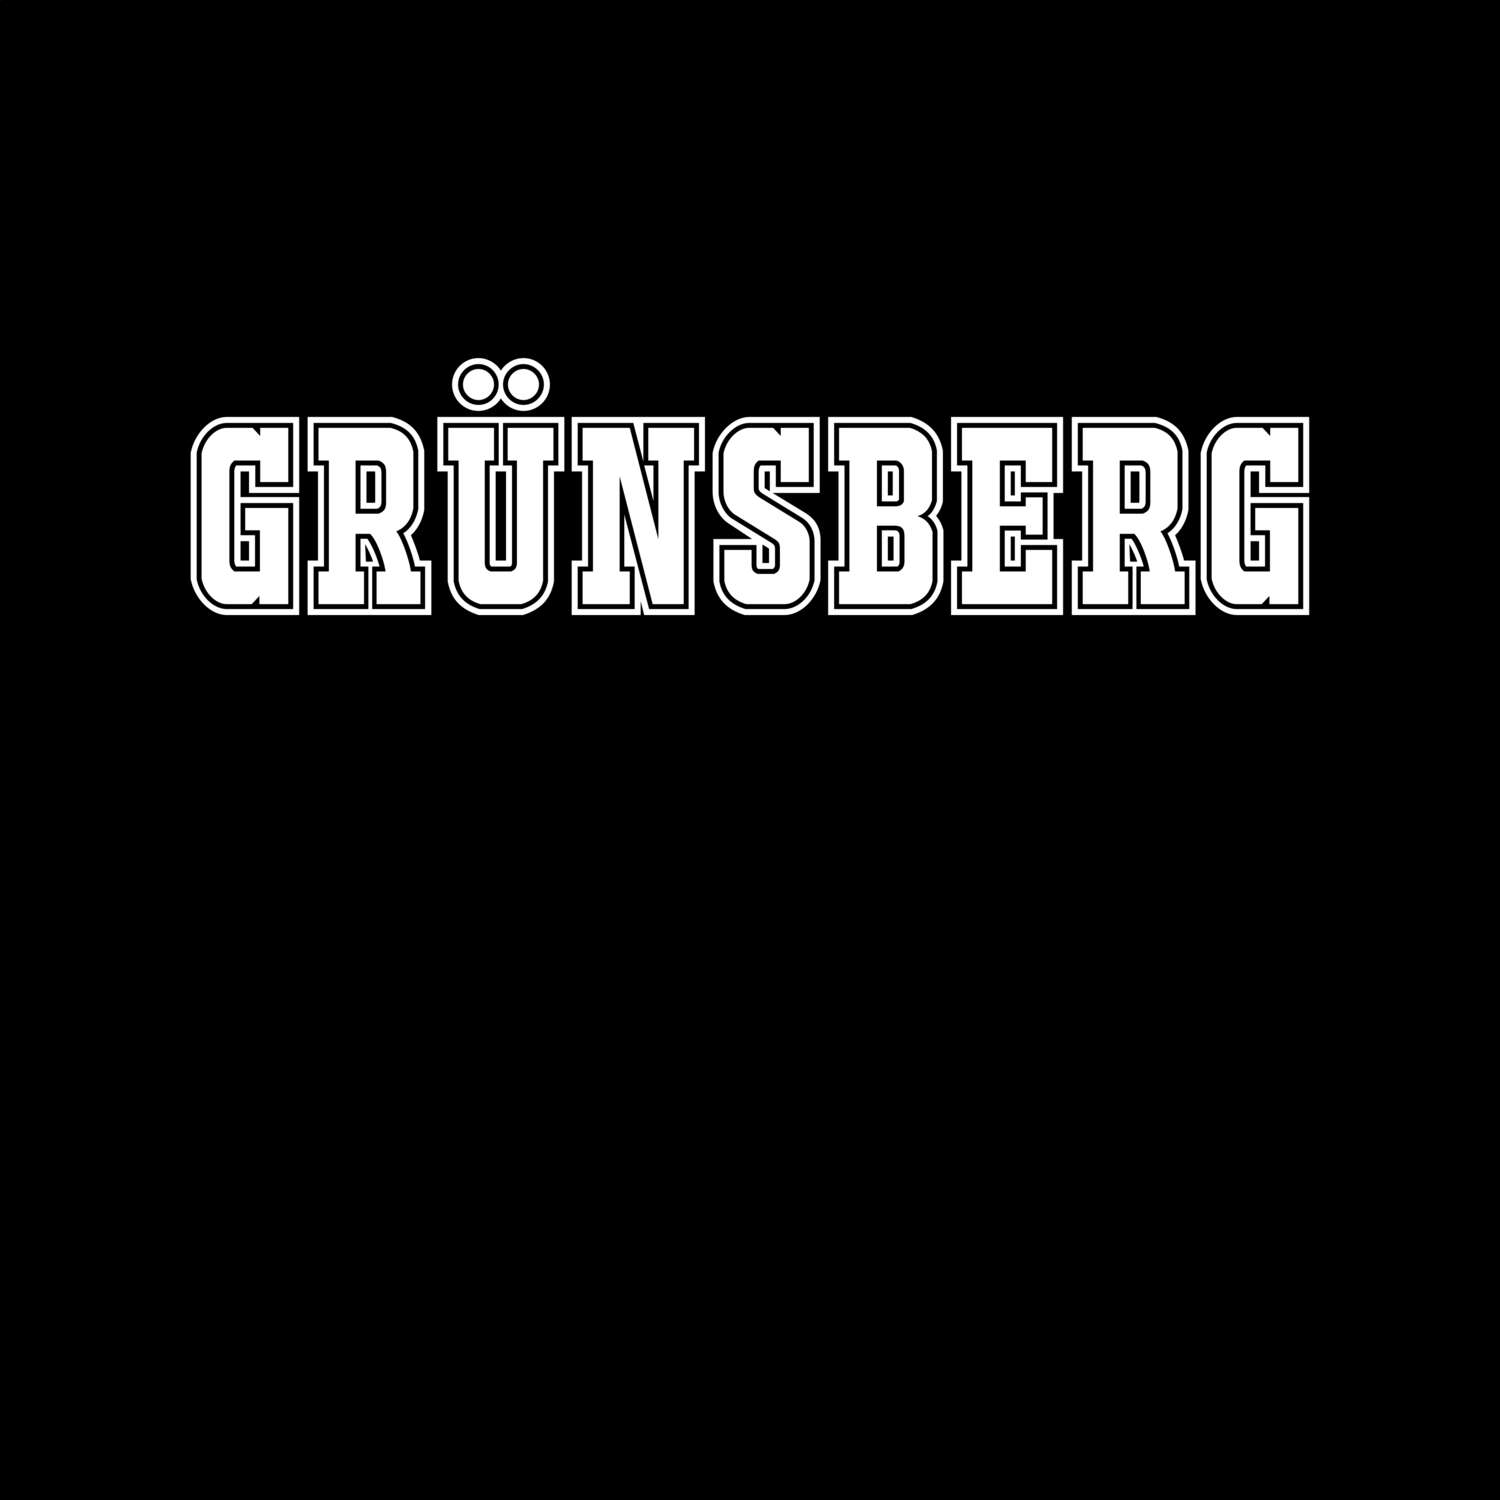 Grünsberg T-Shirt »Classic«